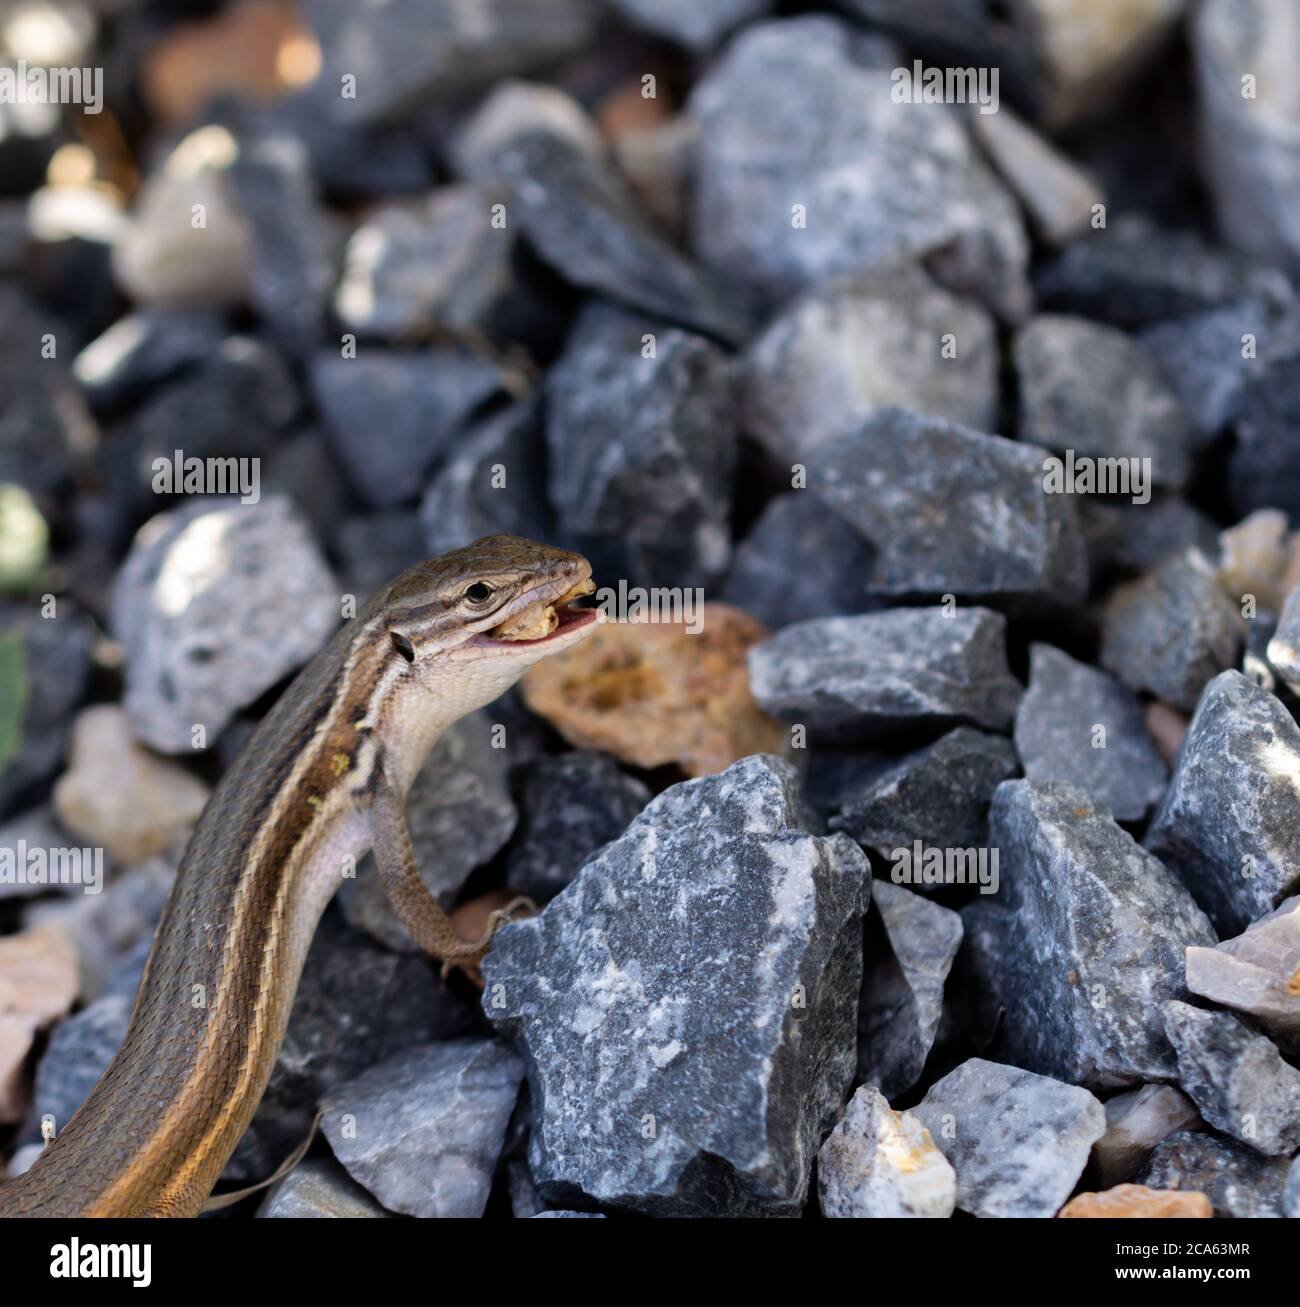 Lizard devouring a small grasshopper among the gravel Stock Photo